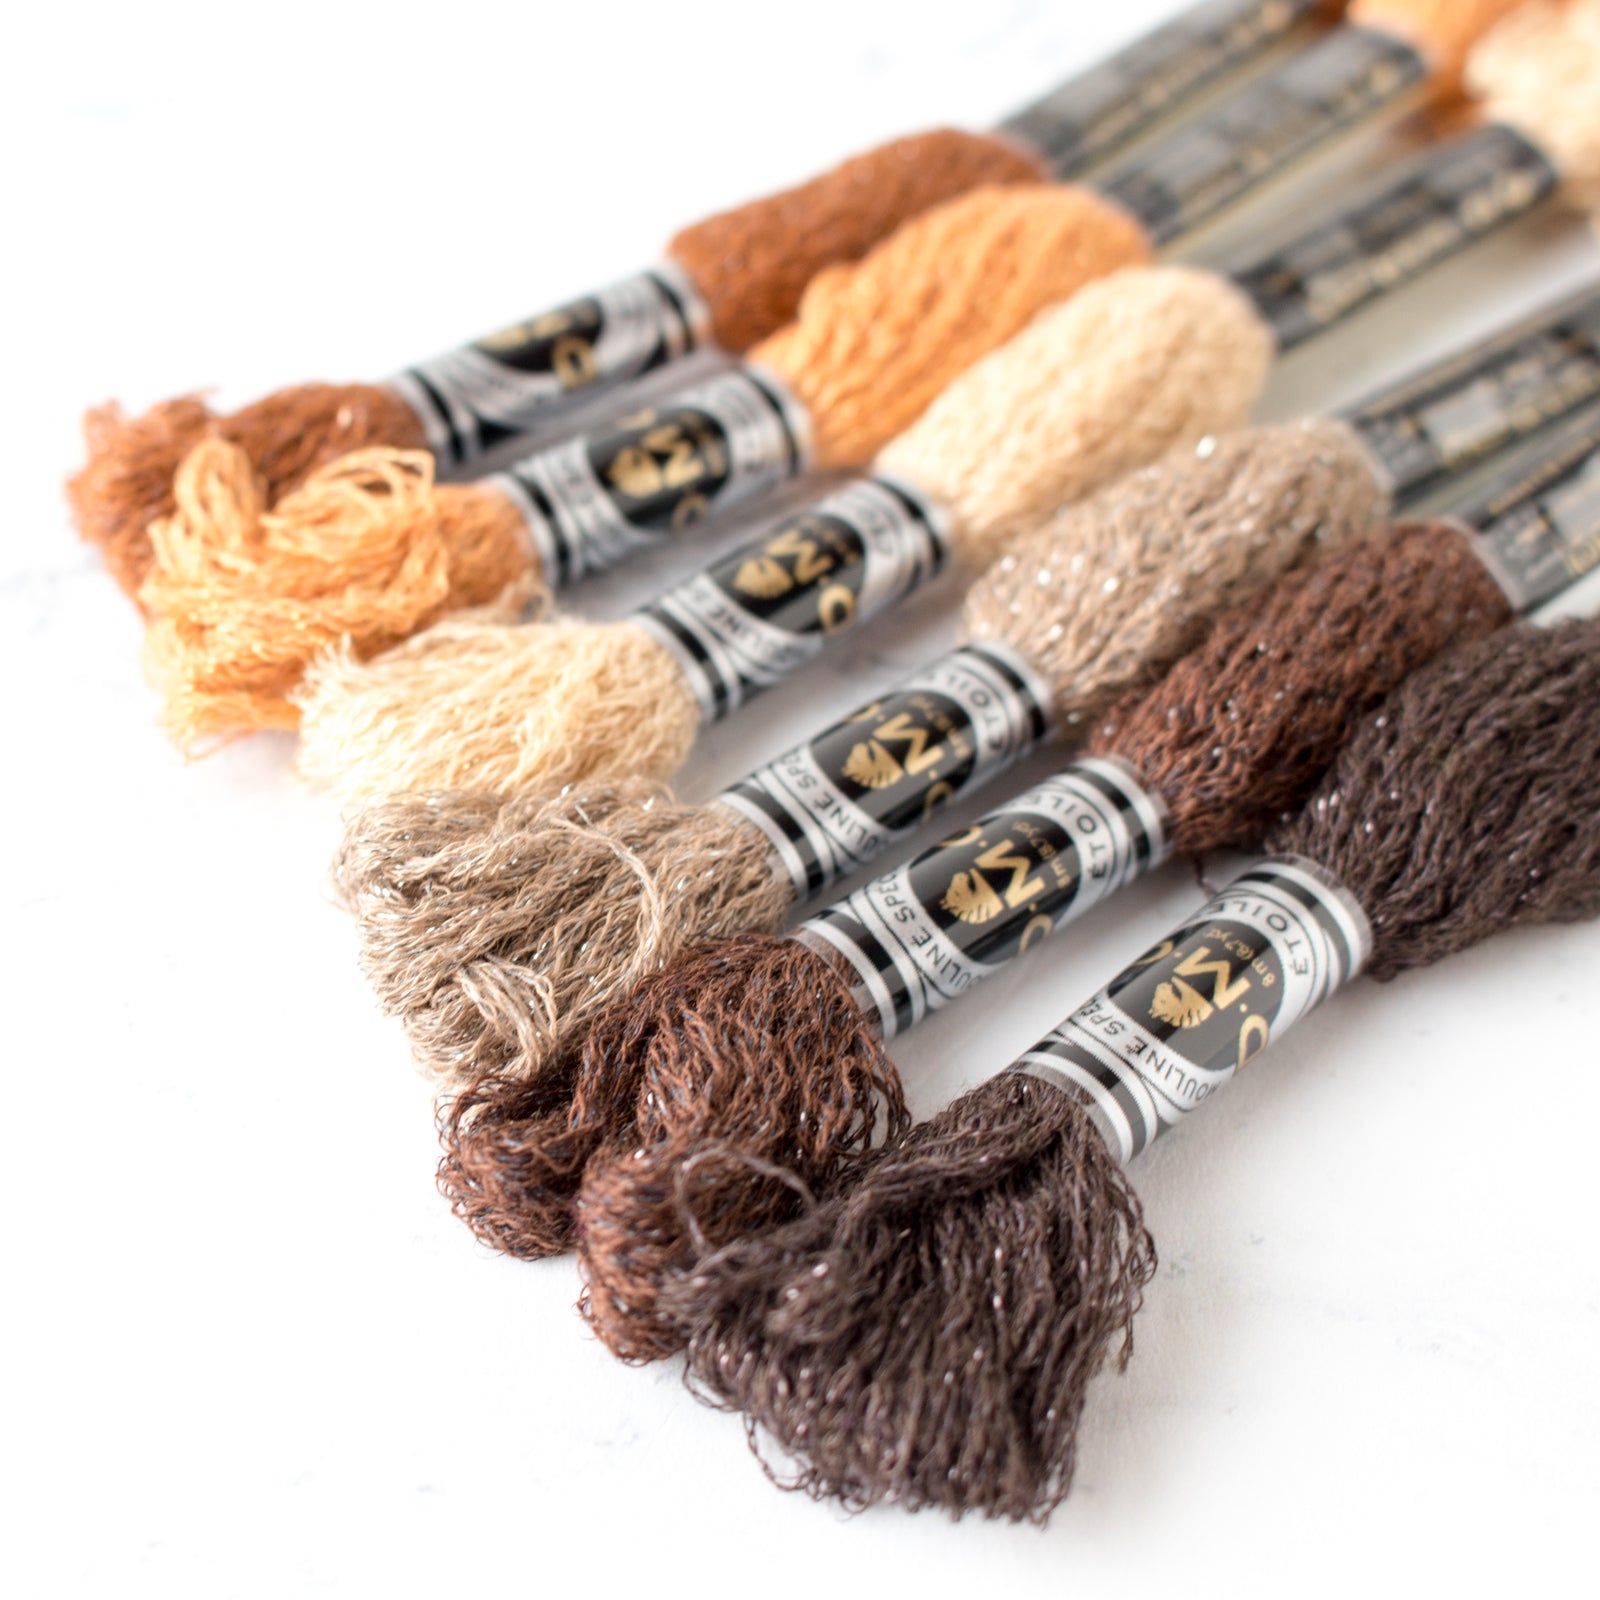 Wool-embroidery yarn DMC, brown colors